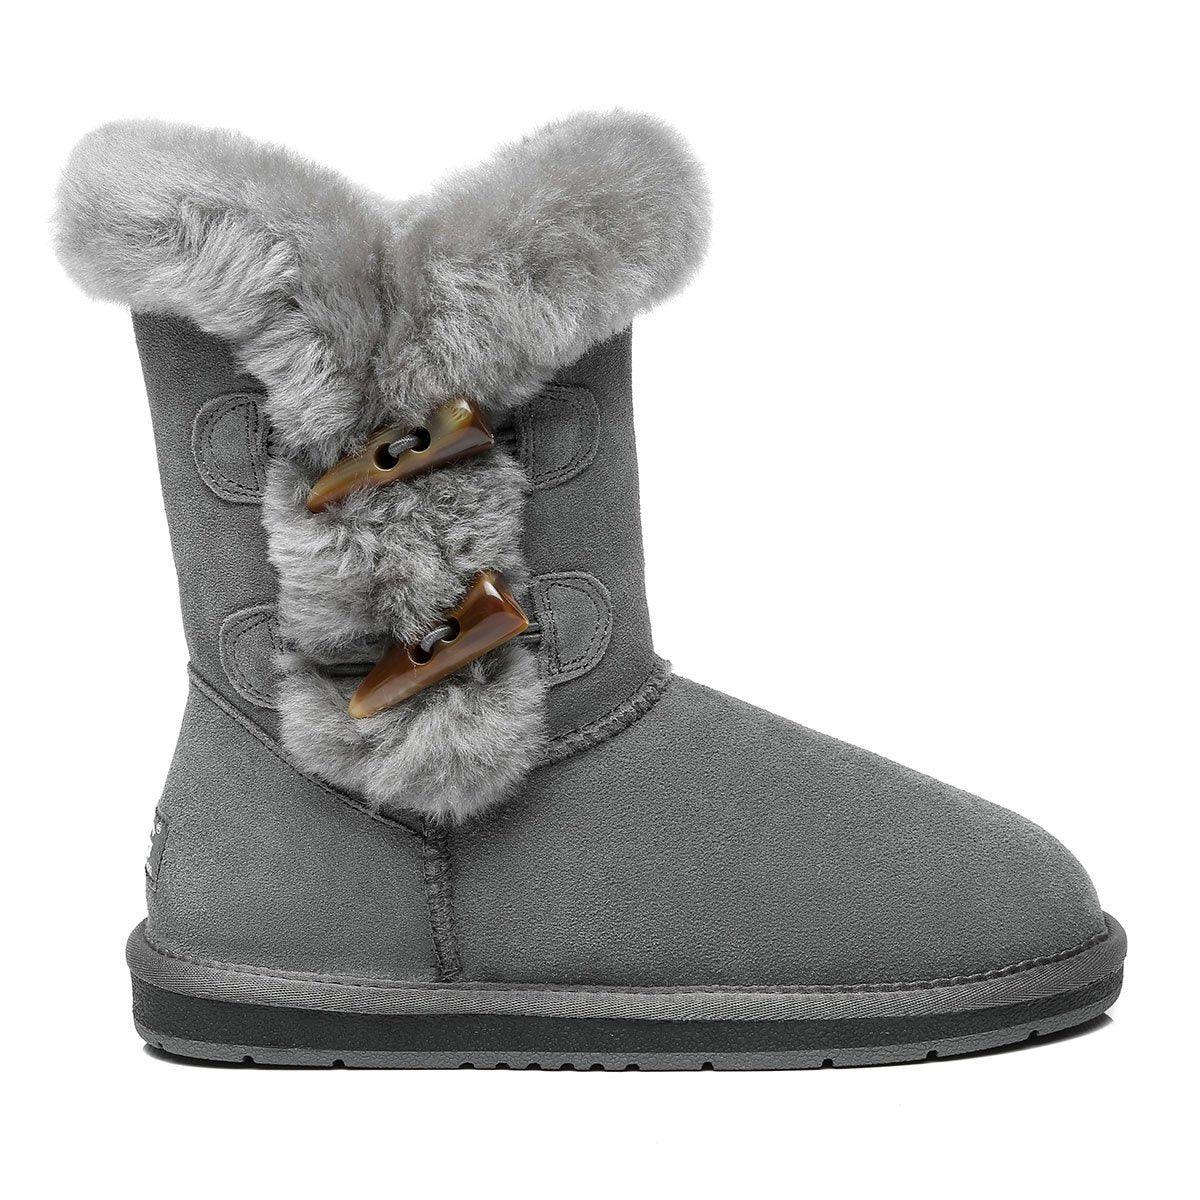 Mens Ugg Boots With Fur Shop | bellvalefarms.com